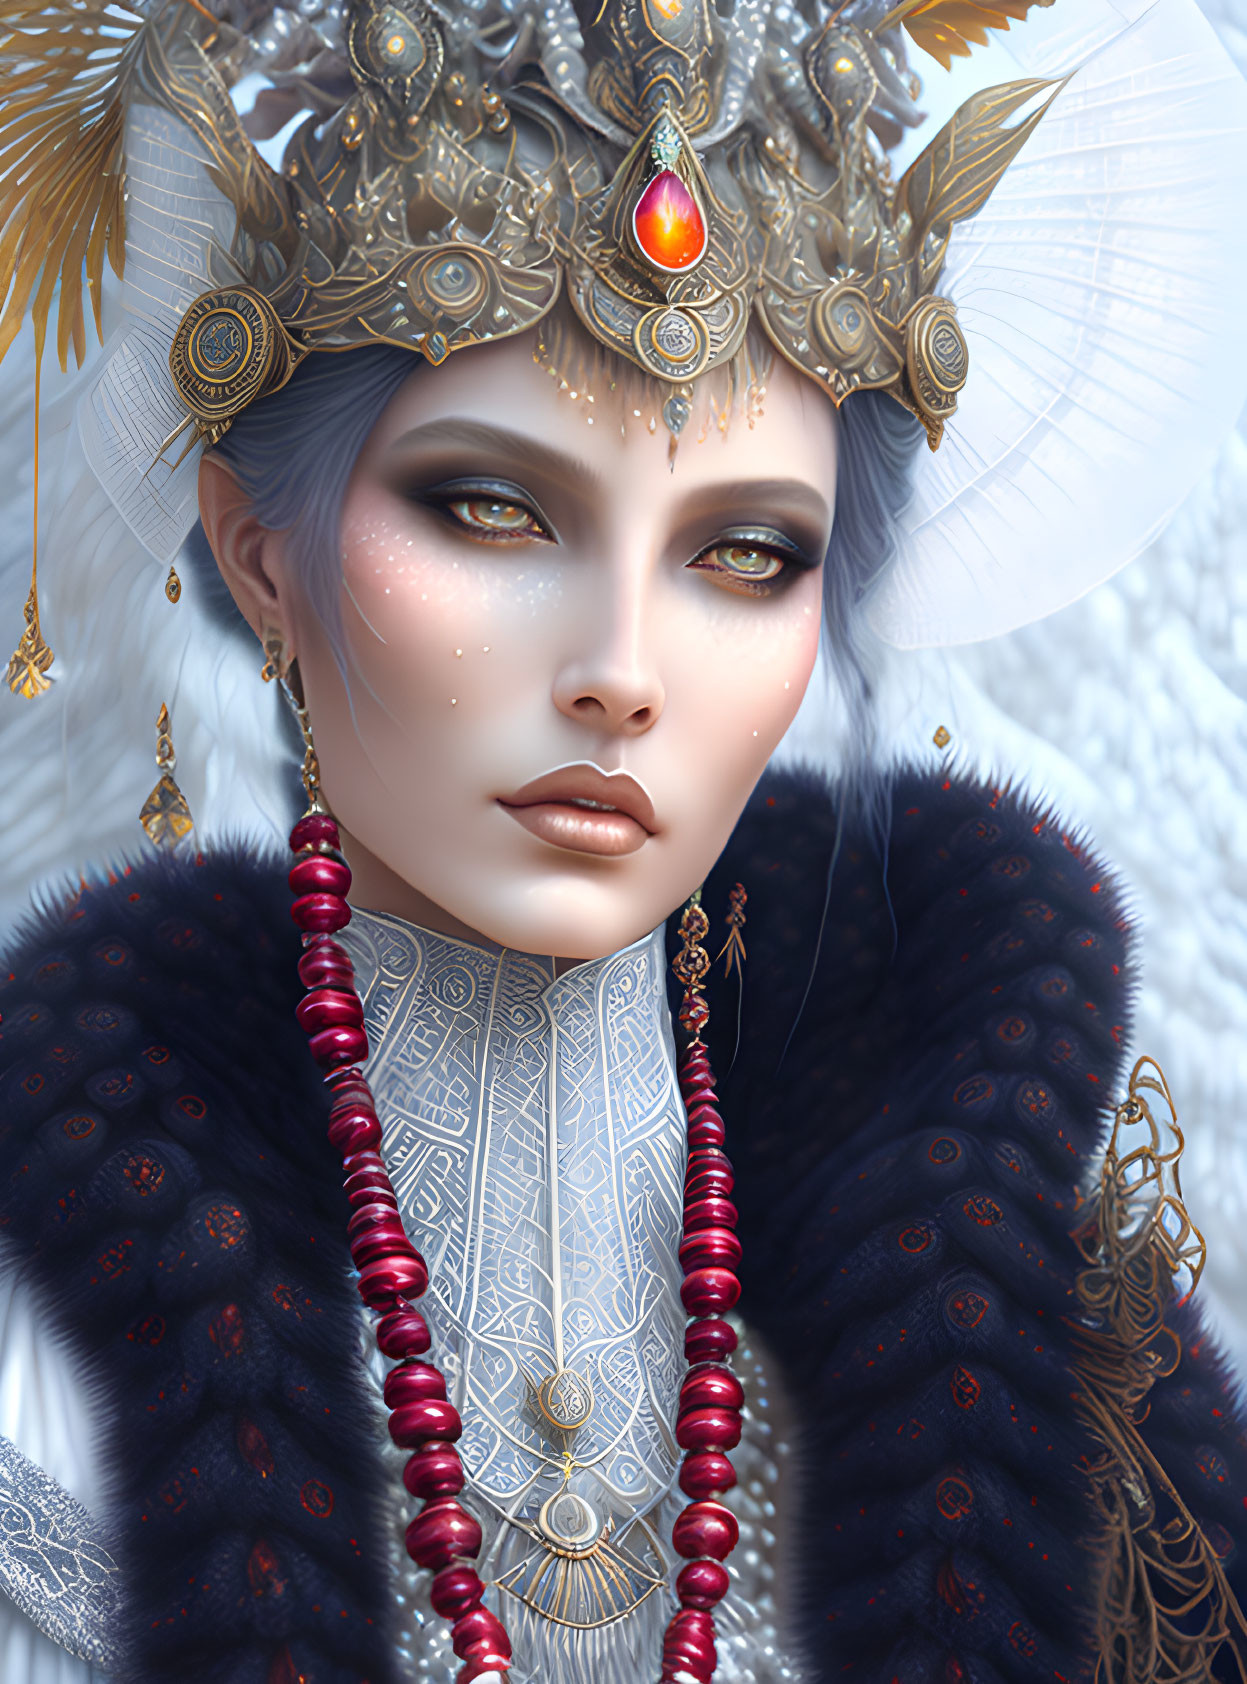 Digital artwork featuring woman with blue eyes, gold headwear, fur garment, and red gem.